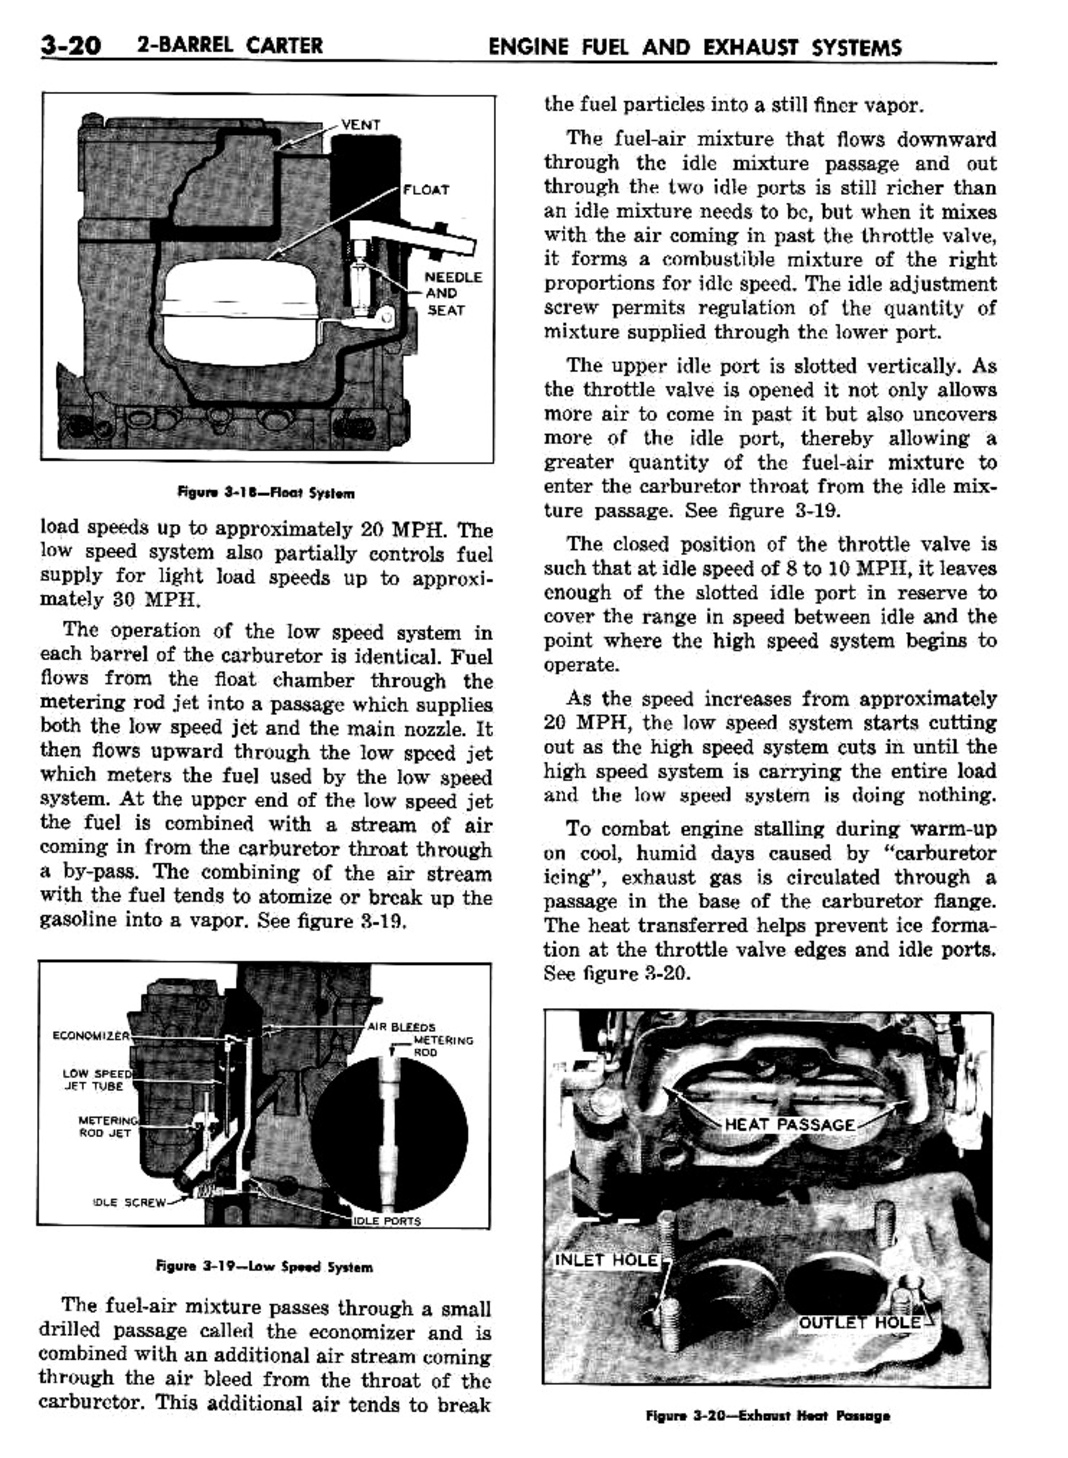 n_04 1957 Buick Shop Manual - Engine Fuel & Exhaust-020-020.jpg